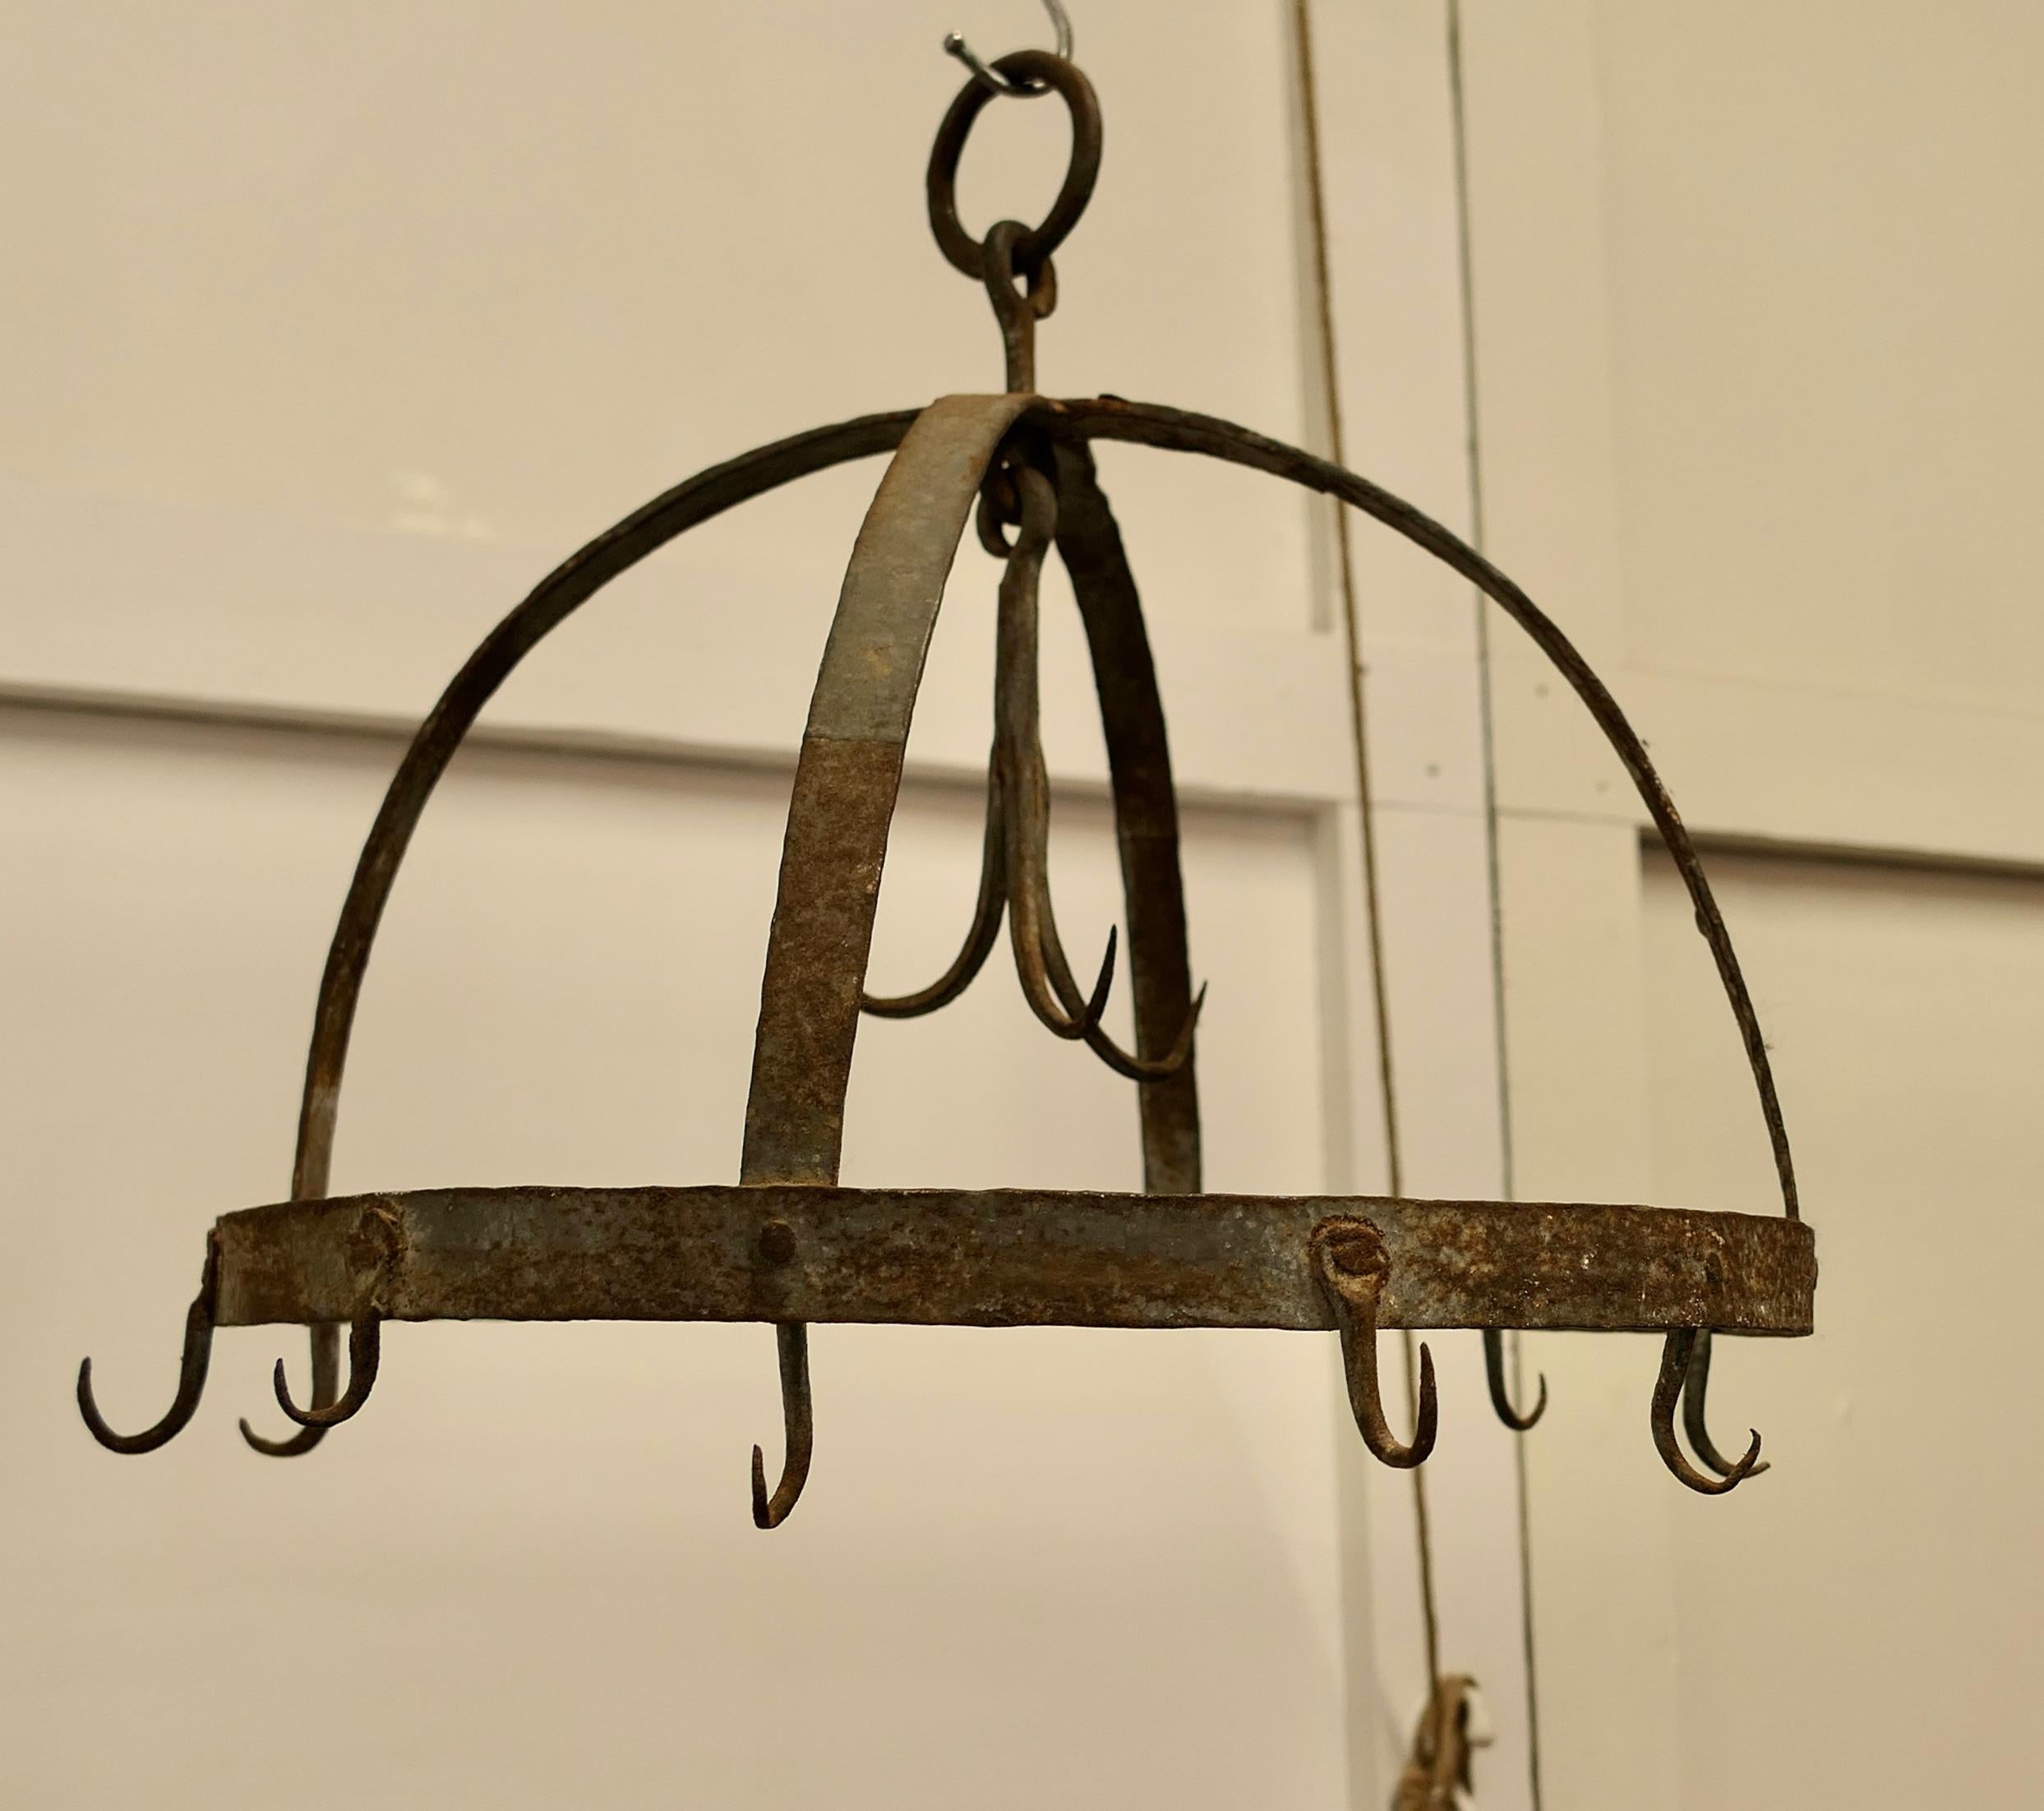 Country Blacksmith Made Iron Game Hanger, Kitchen Utensils or Pot Hanger